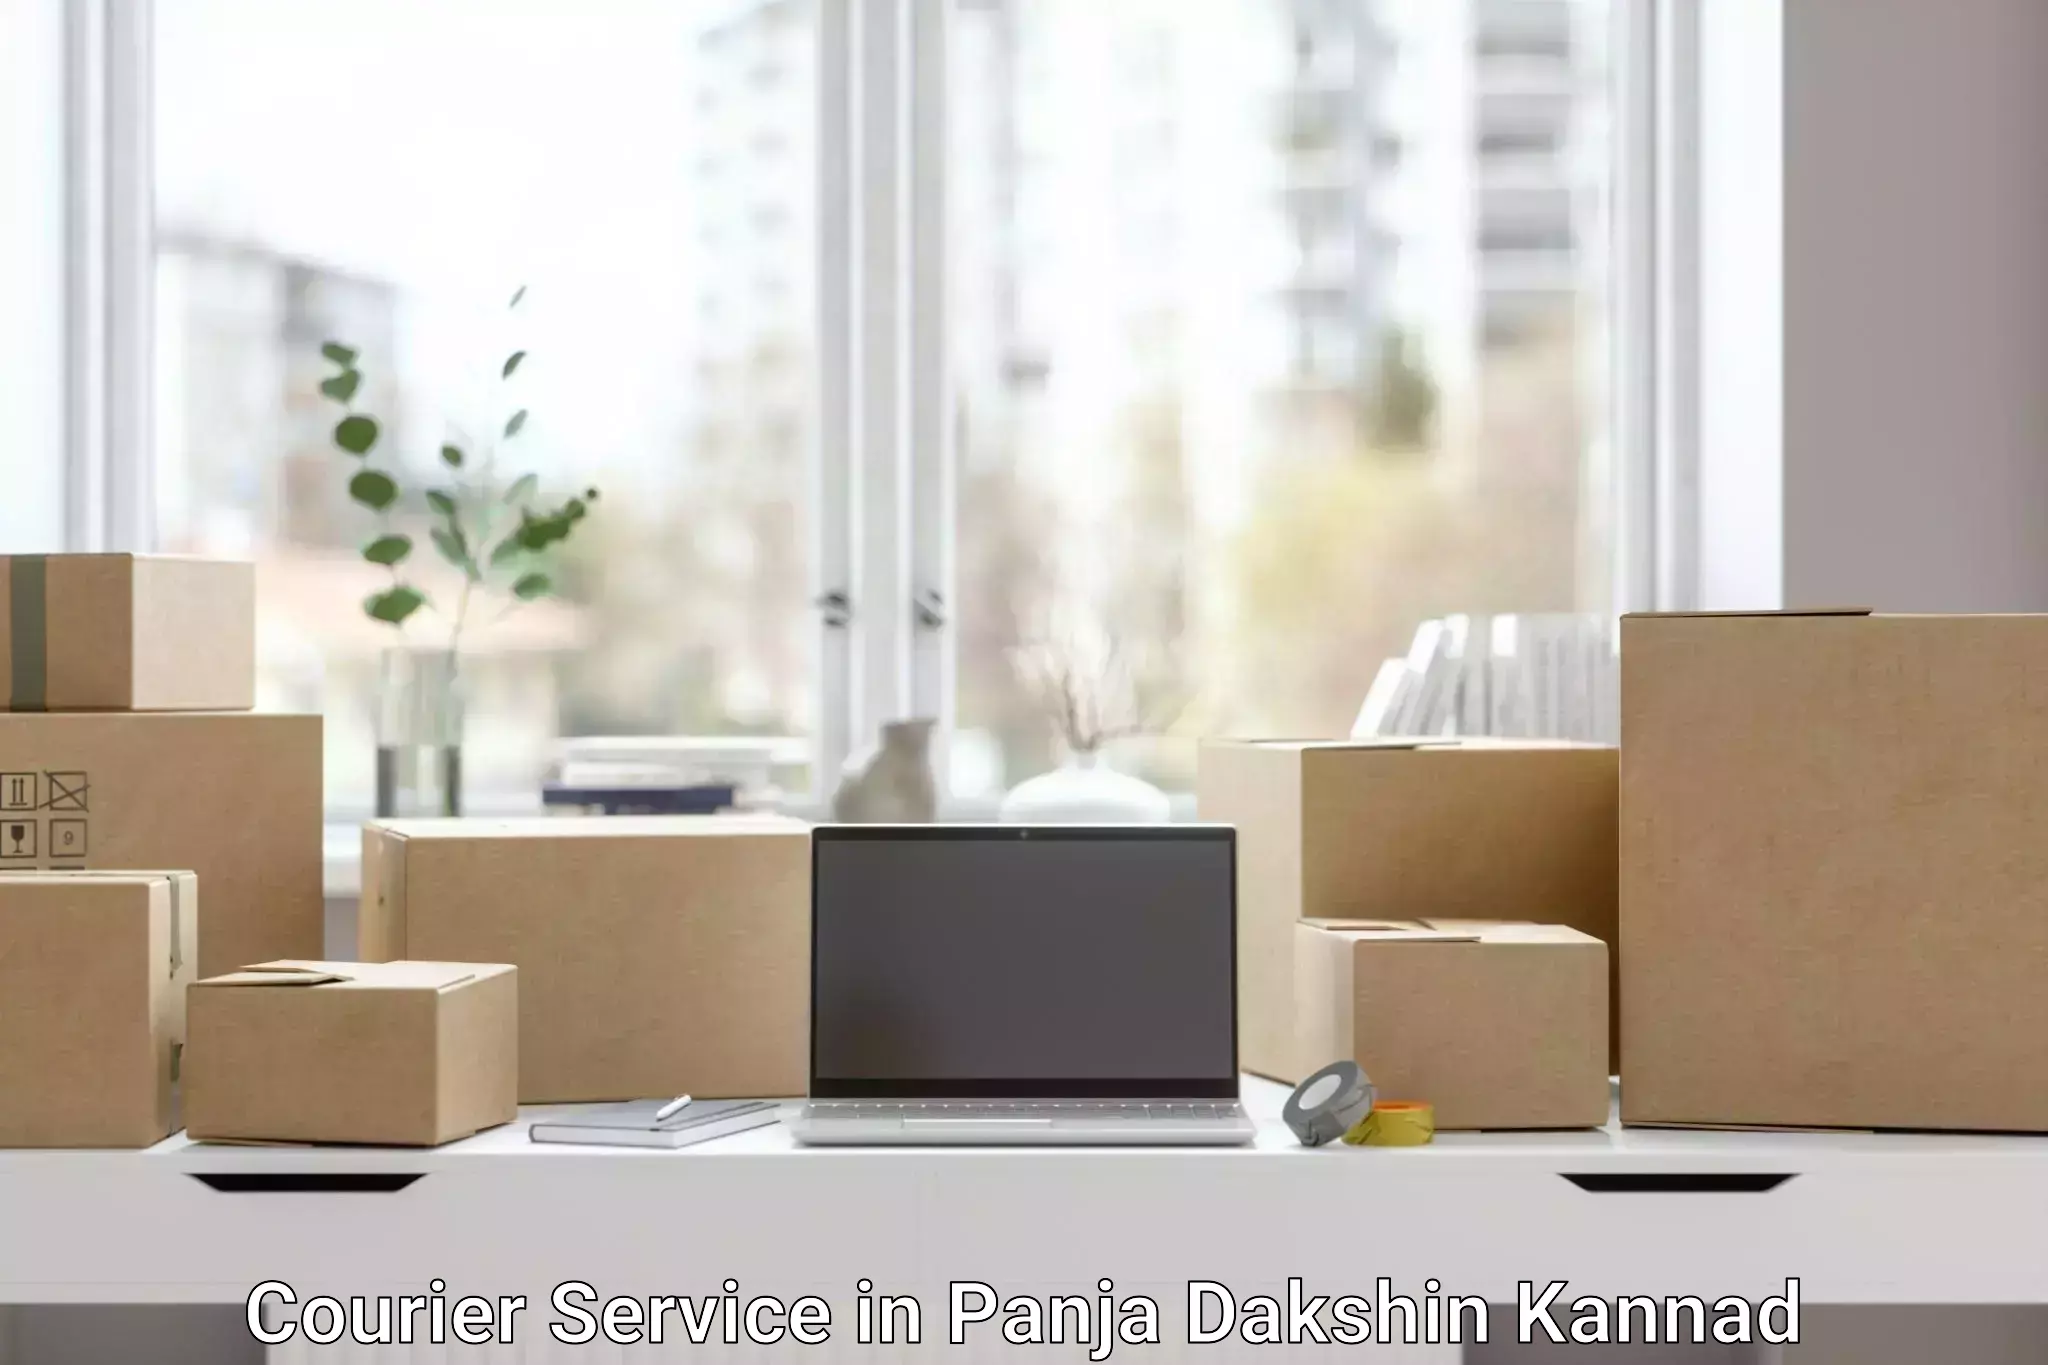 Efficient parcel service in Panja Dakshin Kannad